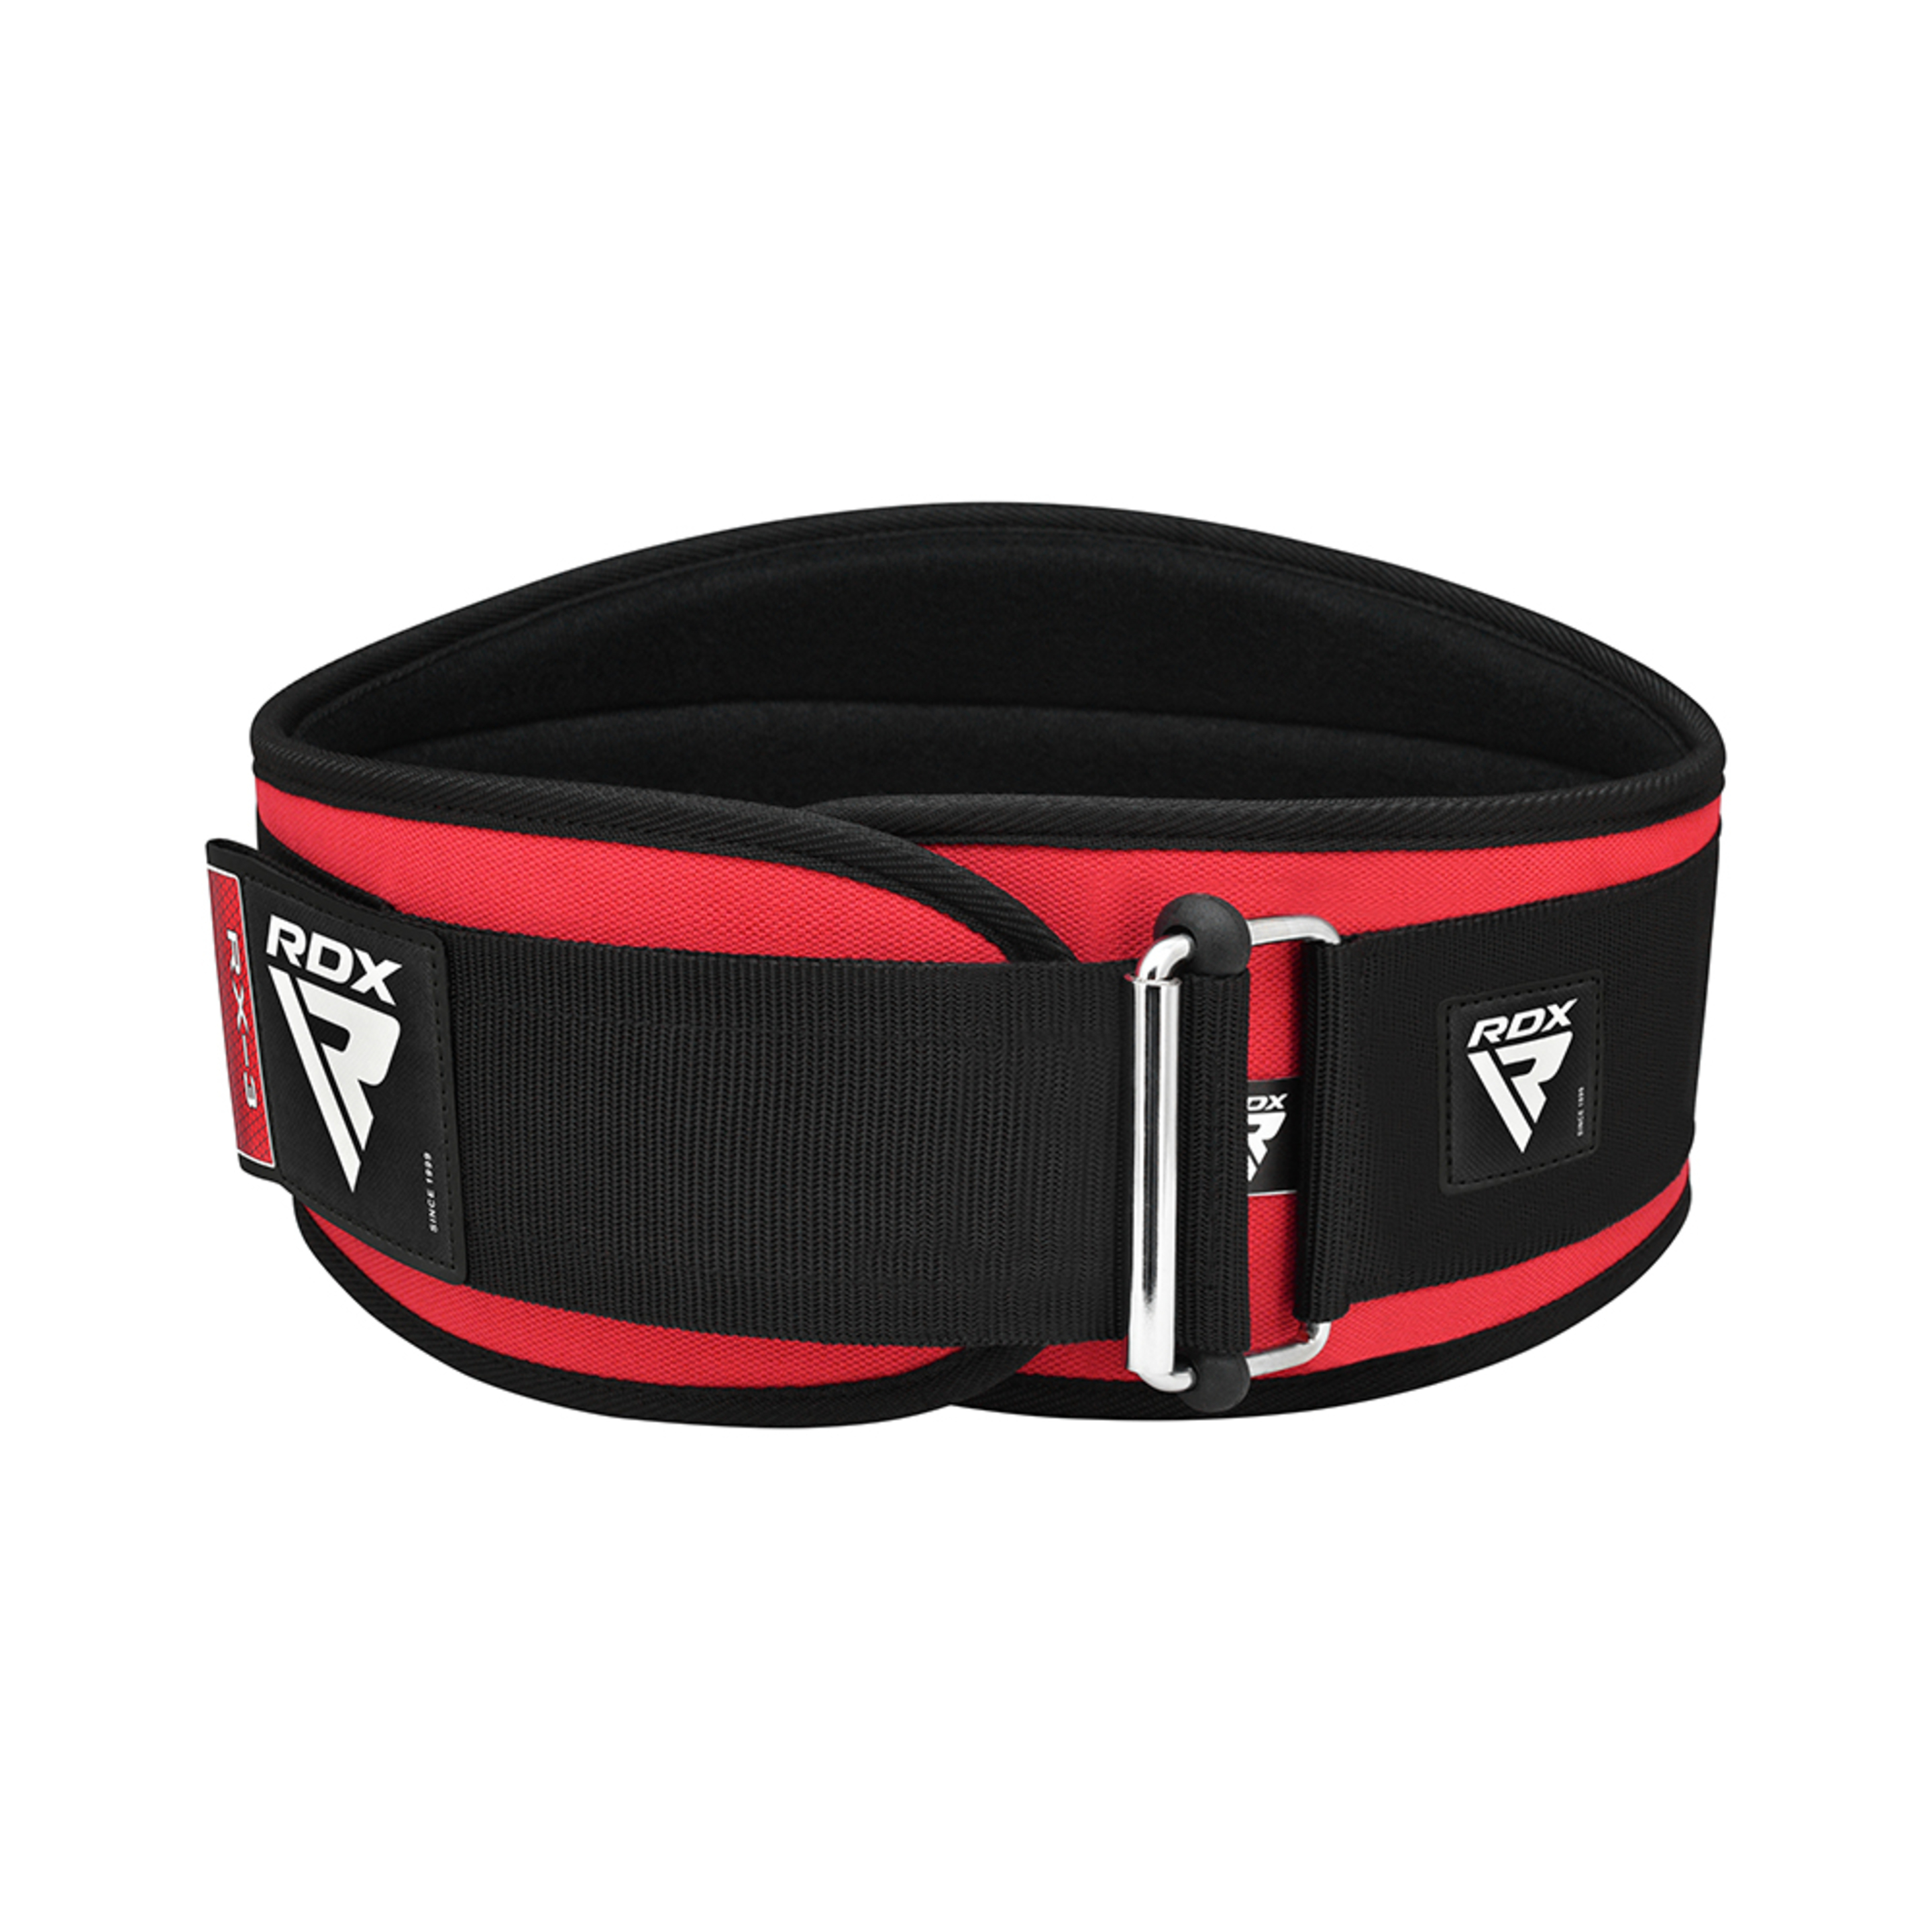 Cinturón De Fitness Rdx Wbe-rx3 - rojo - 